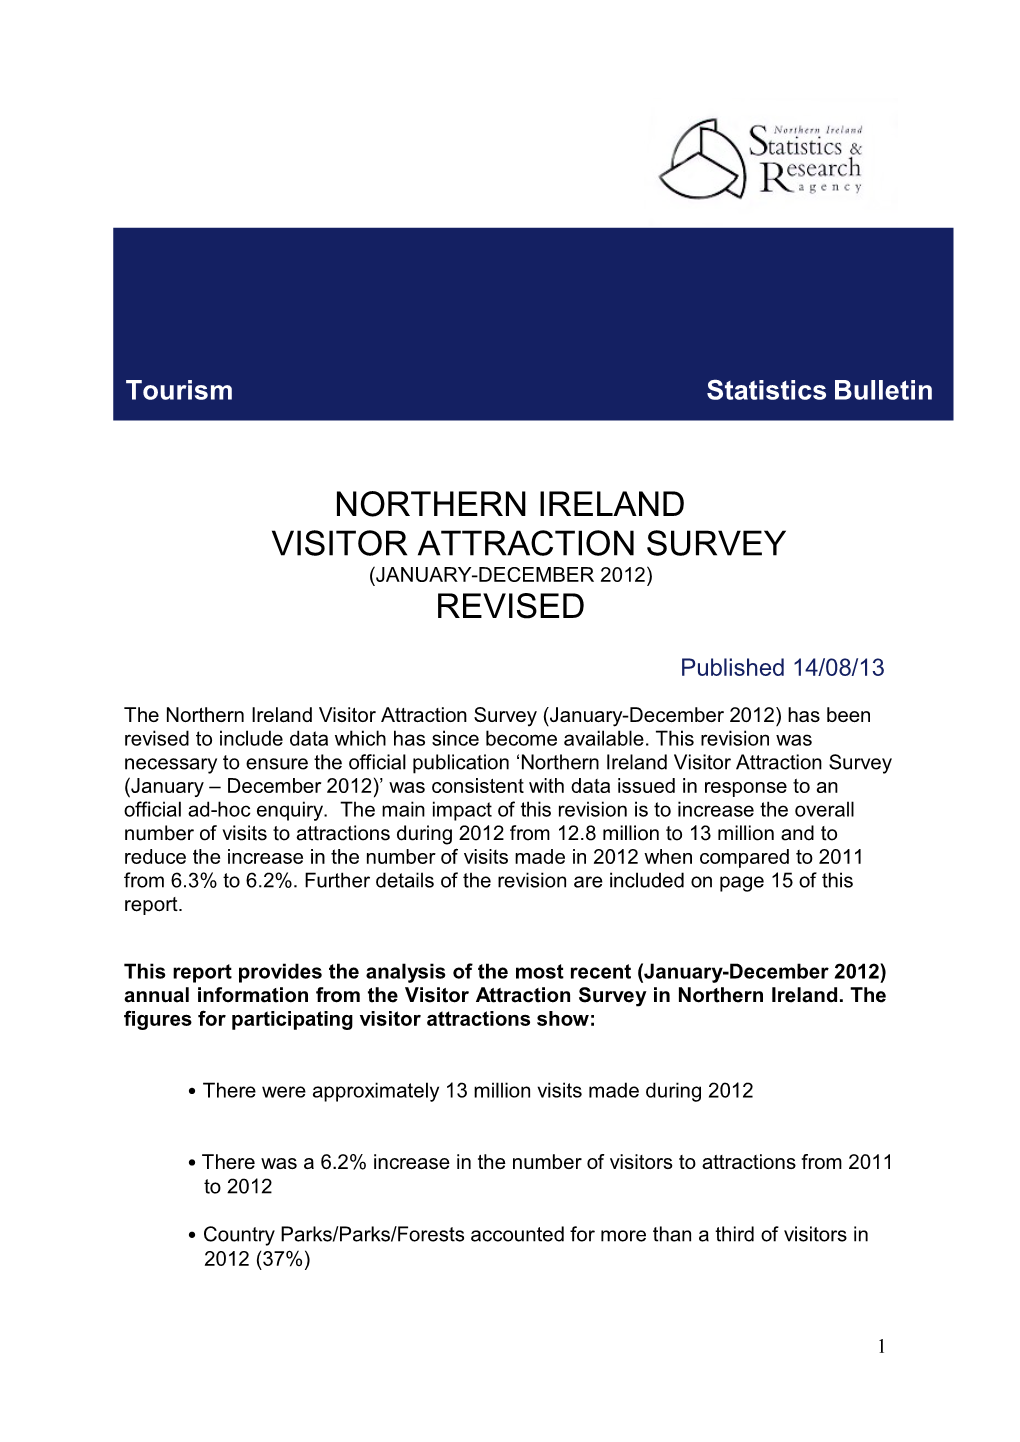 Northern Ireland Visitor Attraction Survey 2012